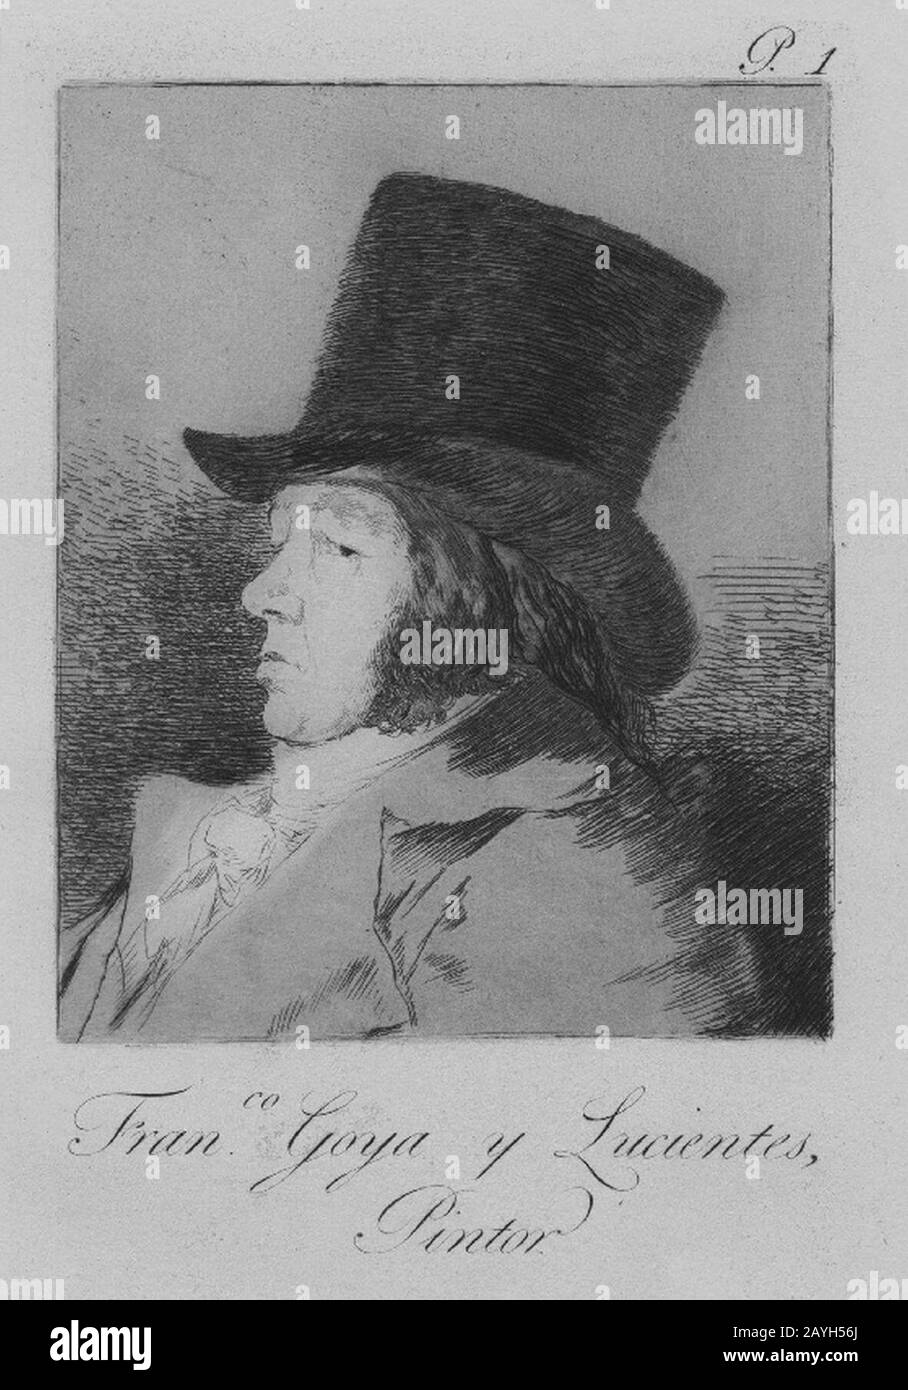 Francisco Goya y Lucientes Pintor. Stock Photo